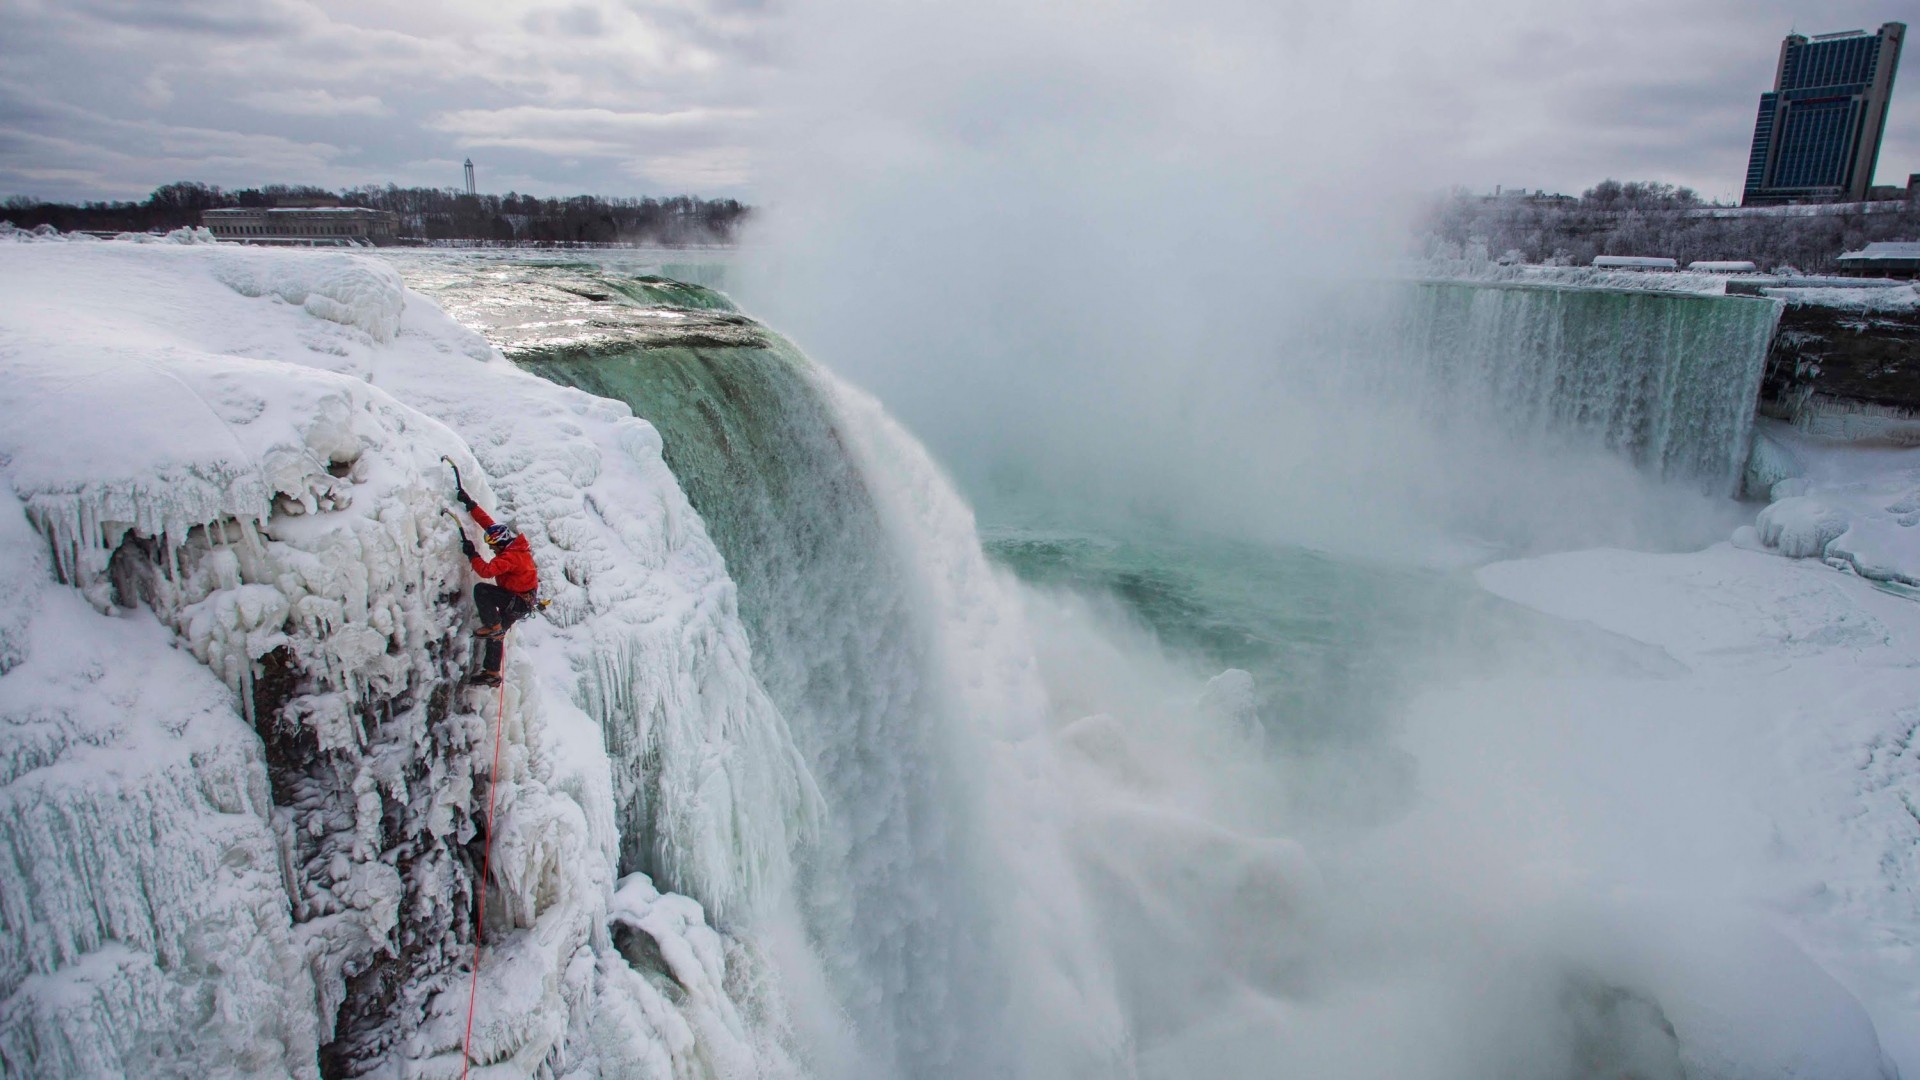 General 1920x1080 winter snow nature landscape Niagara Falls ice climbing men building rocks water waterfall 2015 (Year) men outdoors